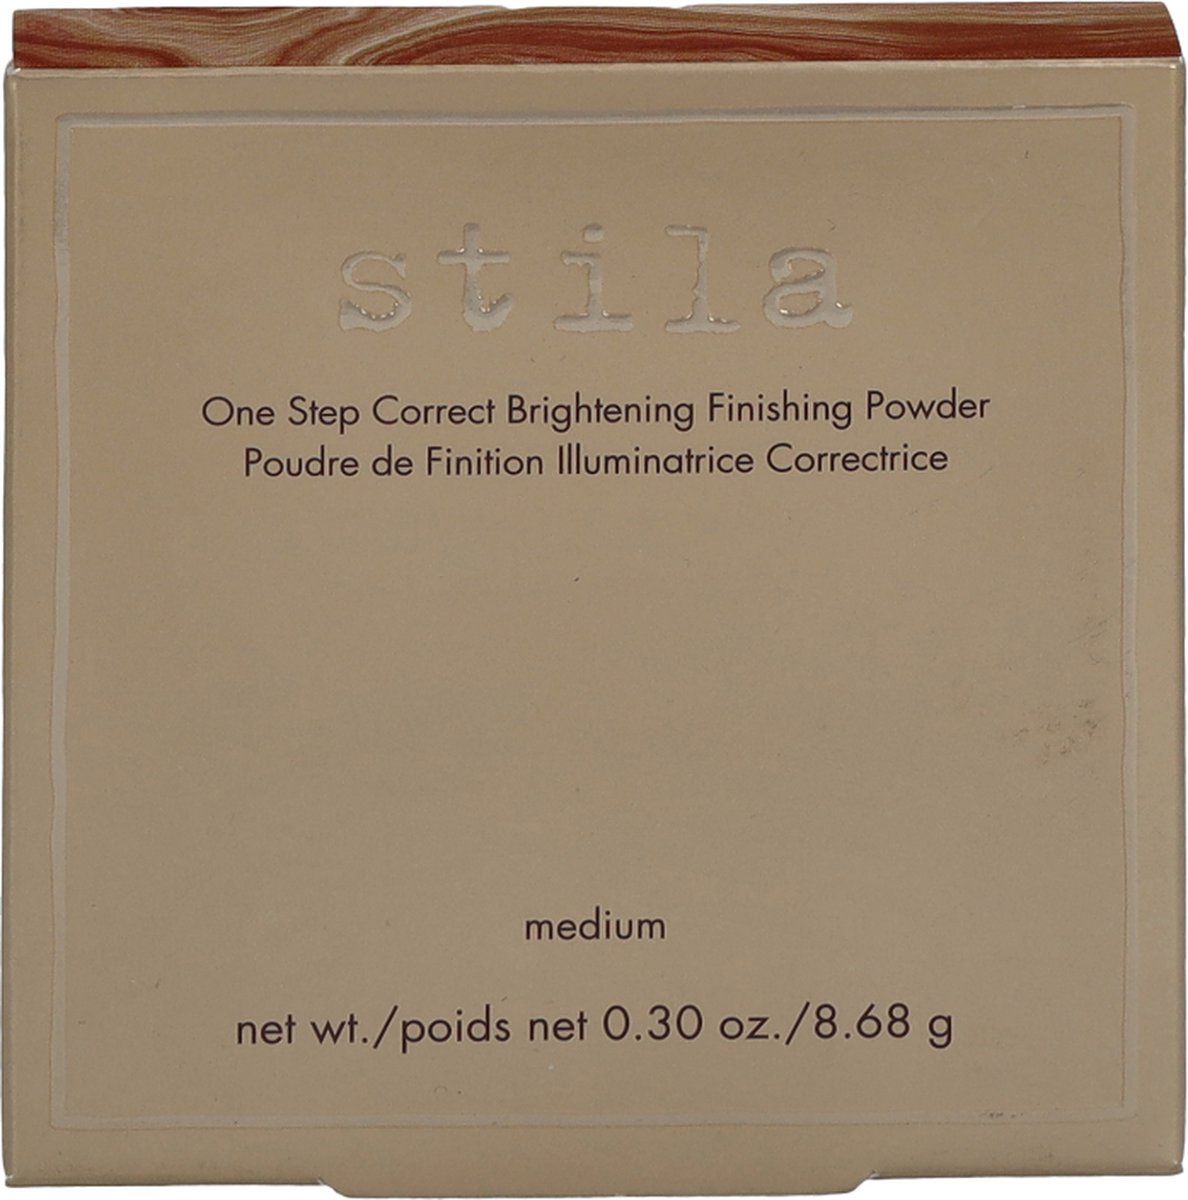 Stila One Step Correct Brightening Finishing Powder